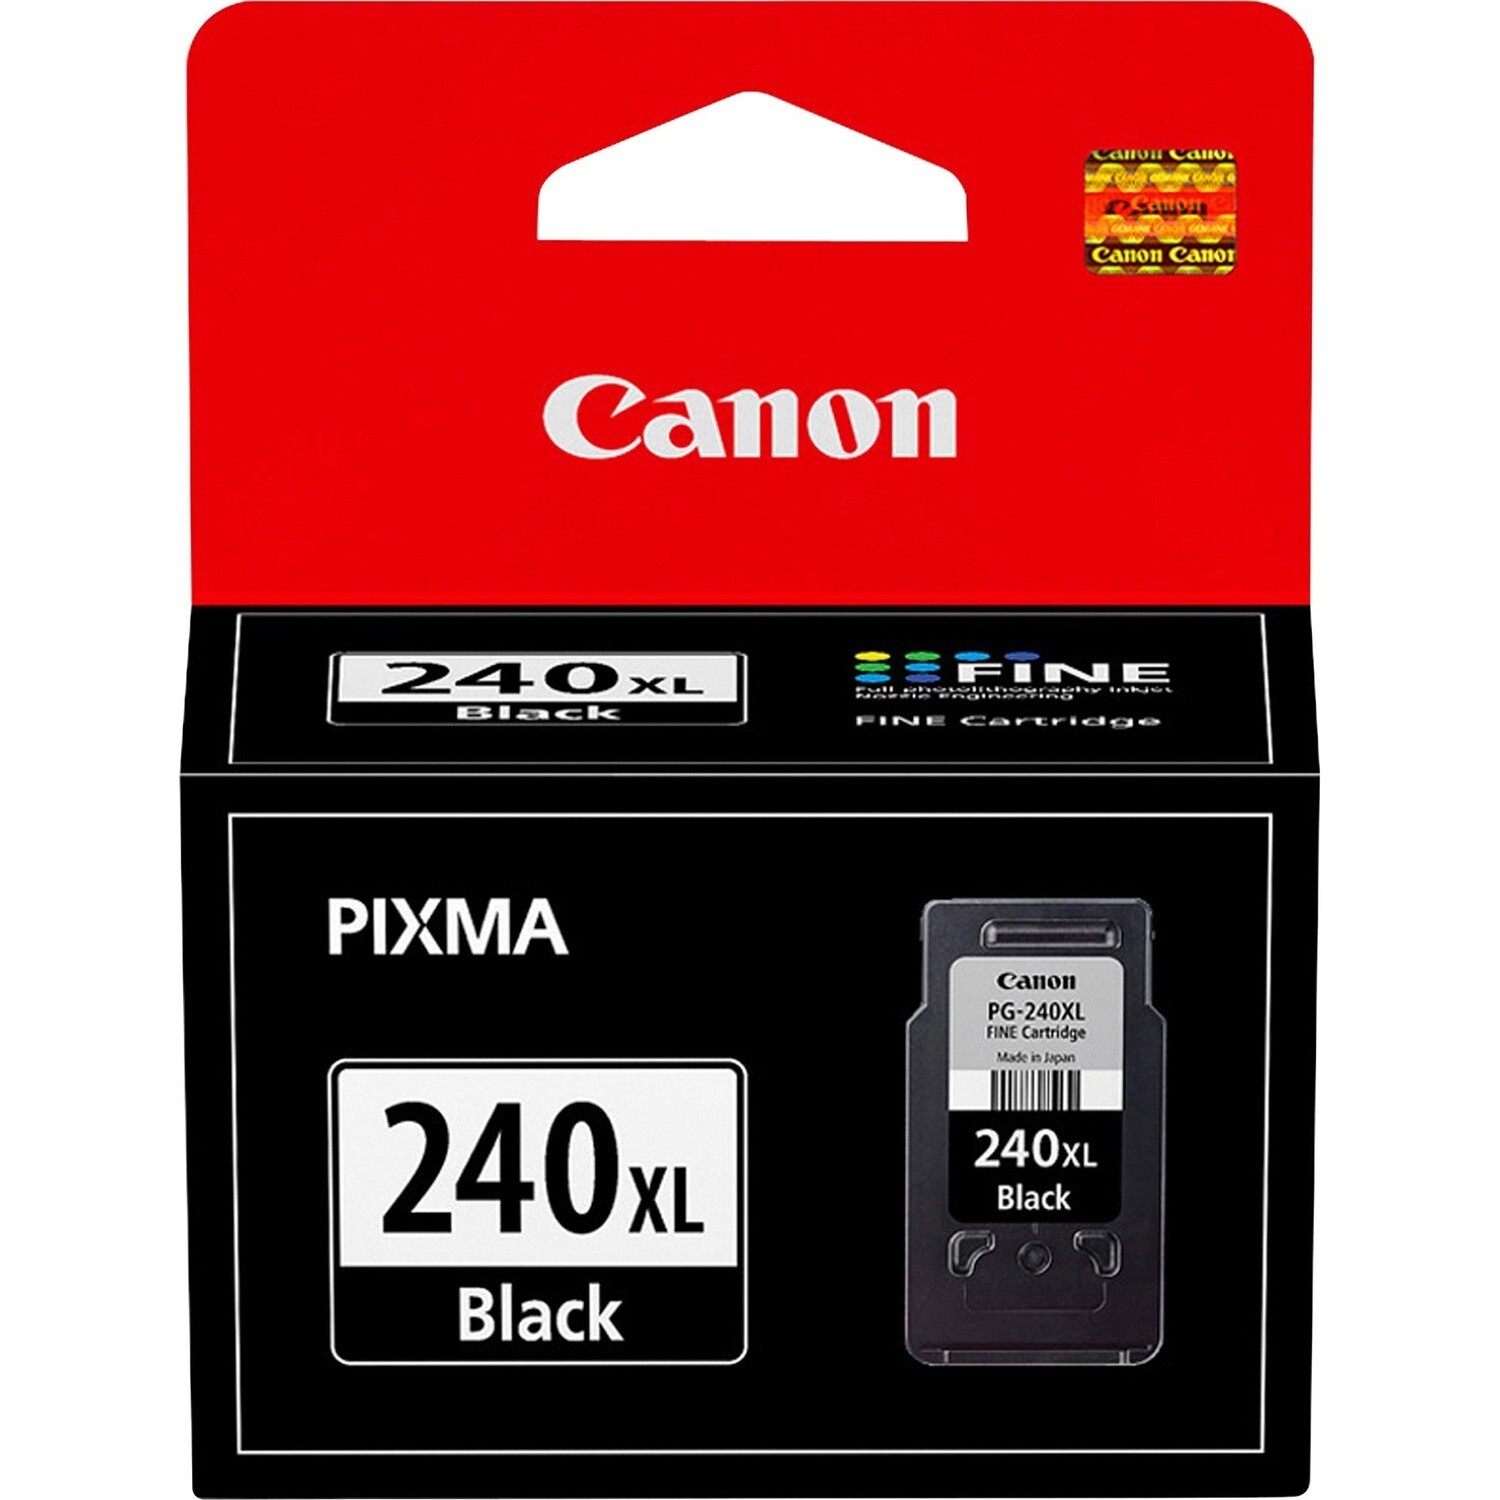 Canon 240Xl Black